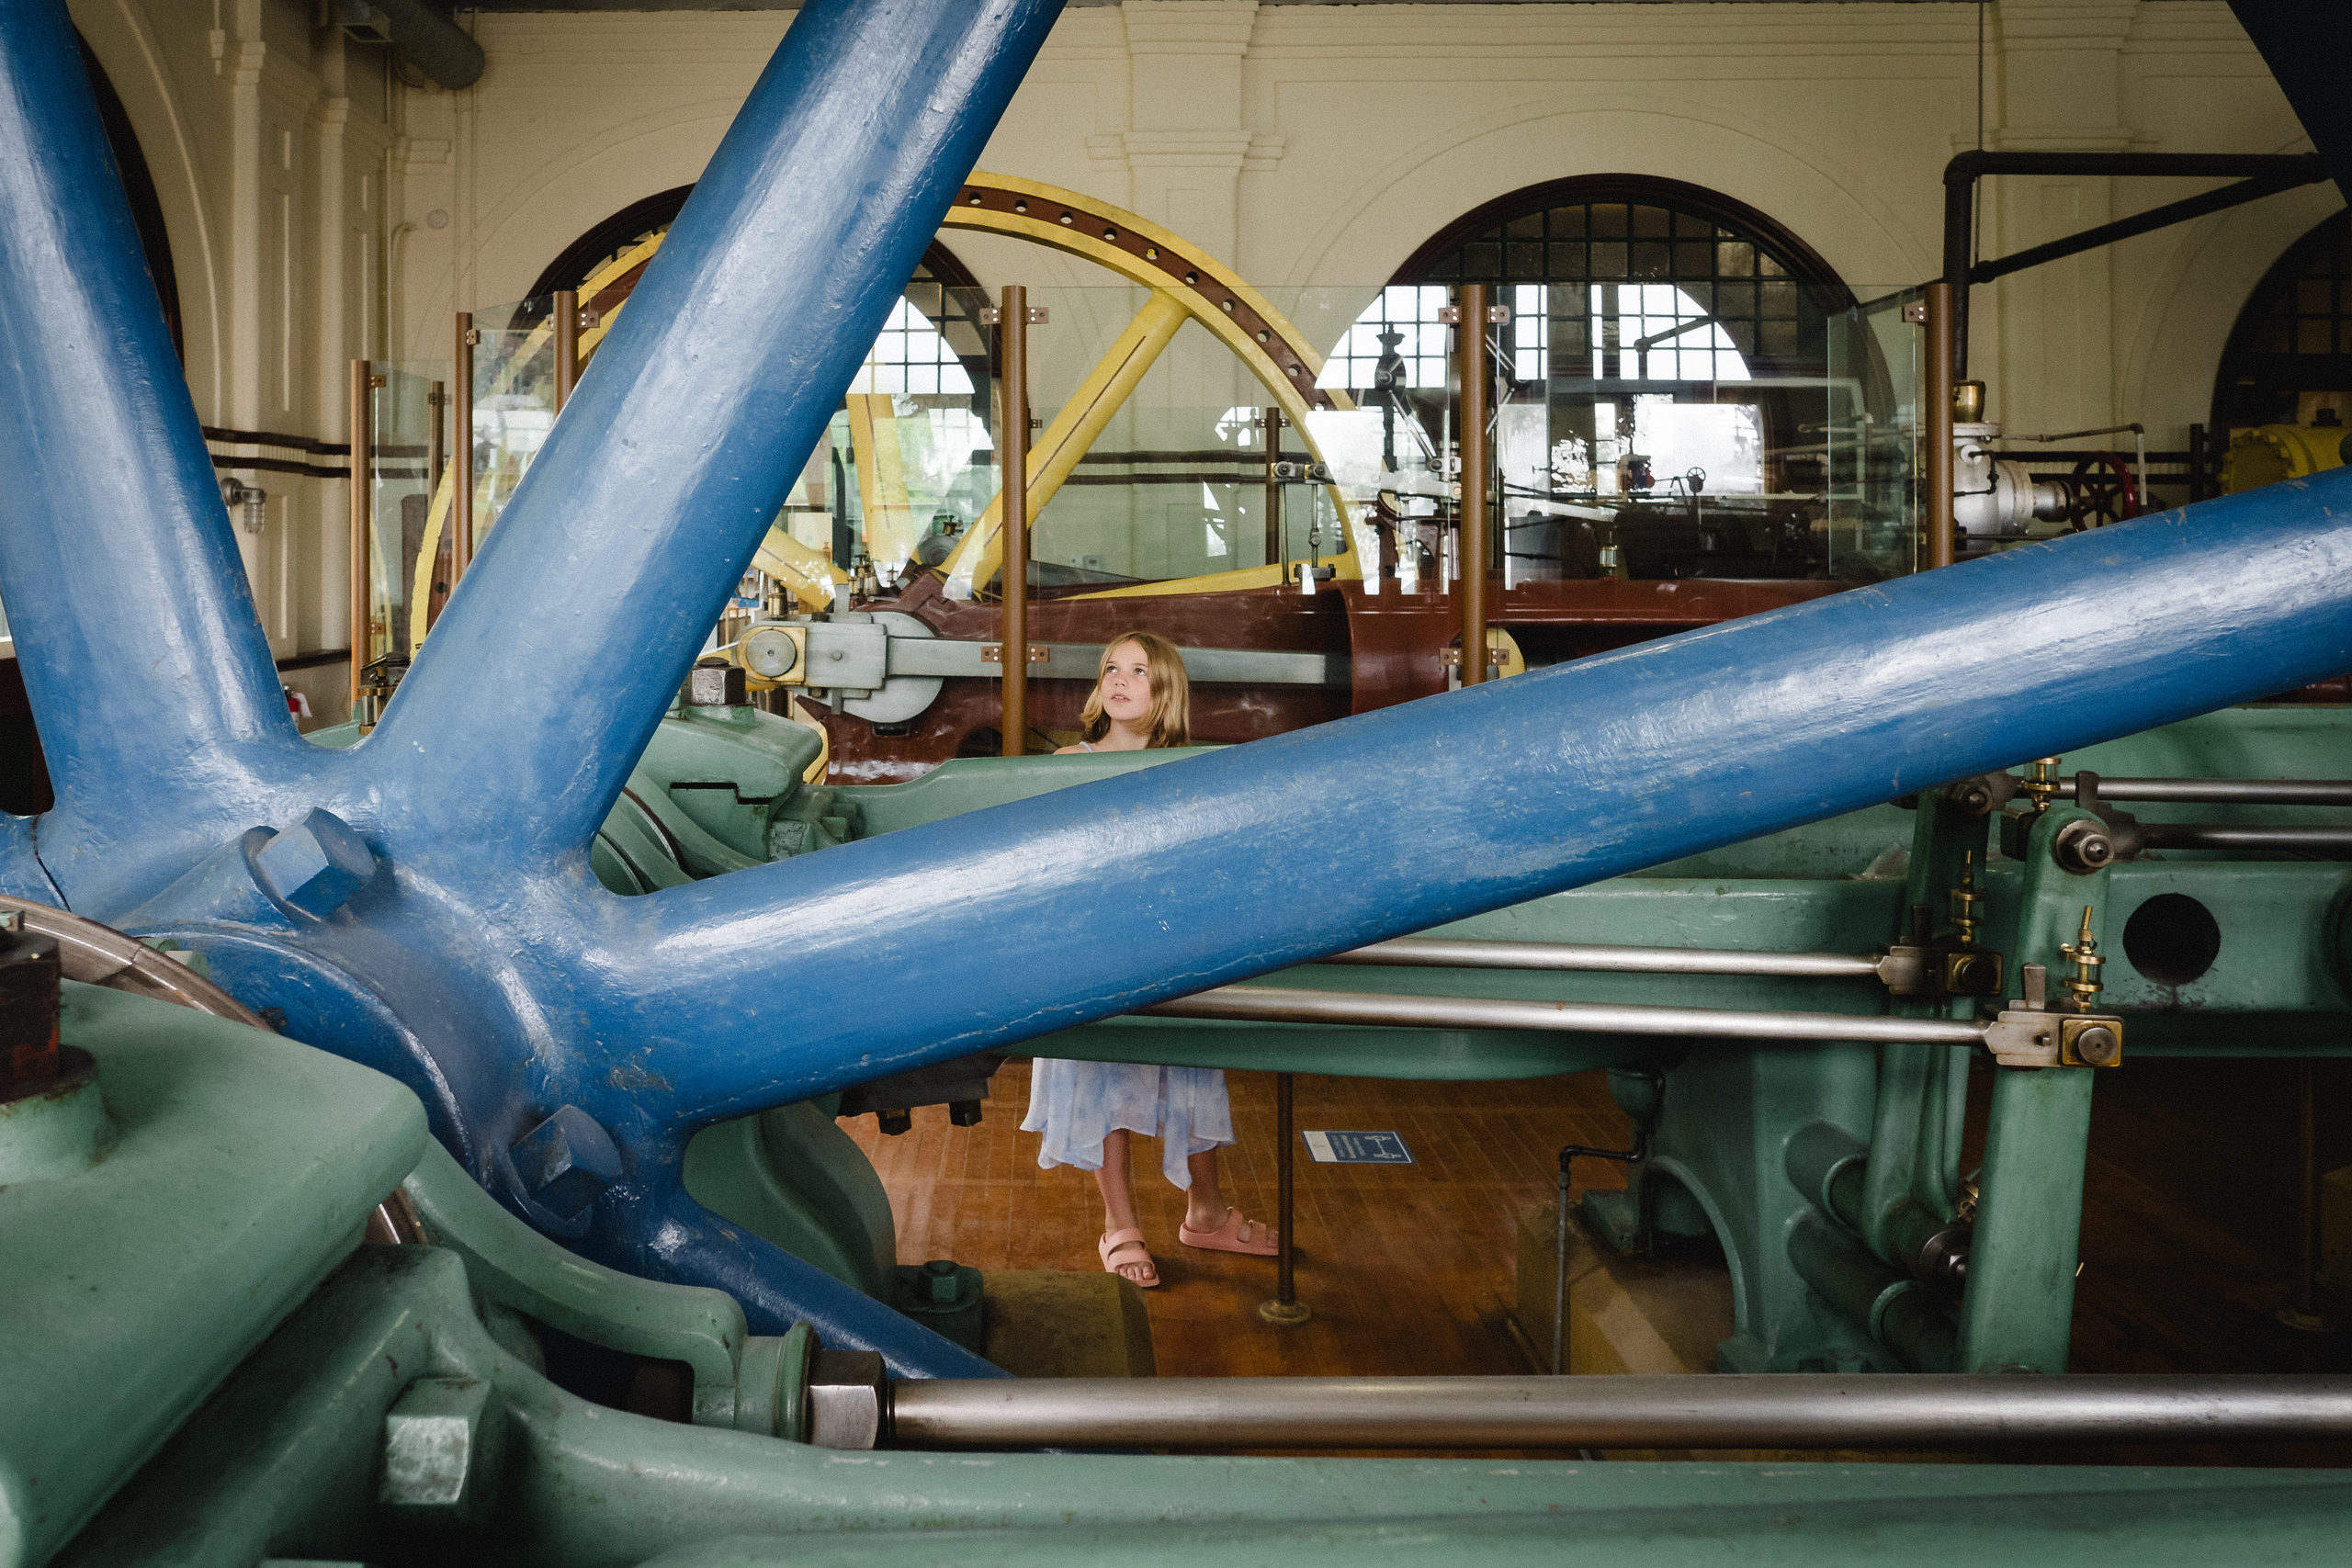 PumpHouse Steam Museum